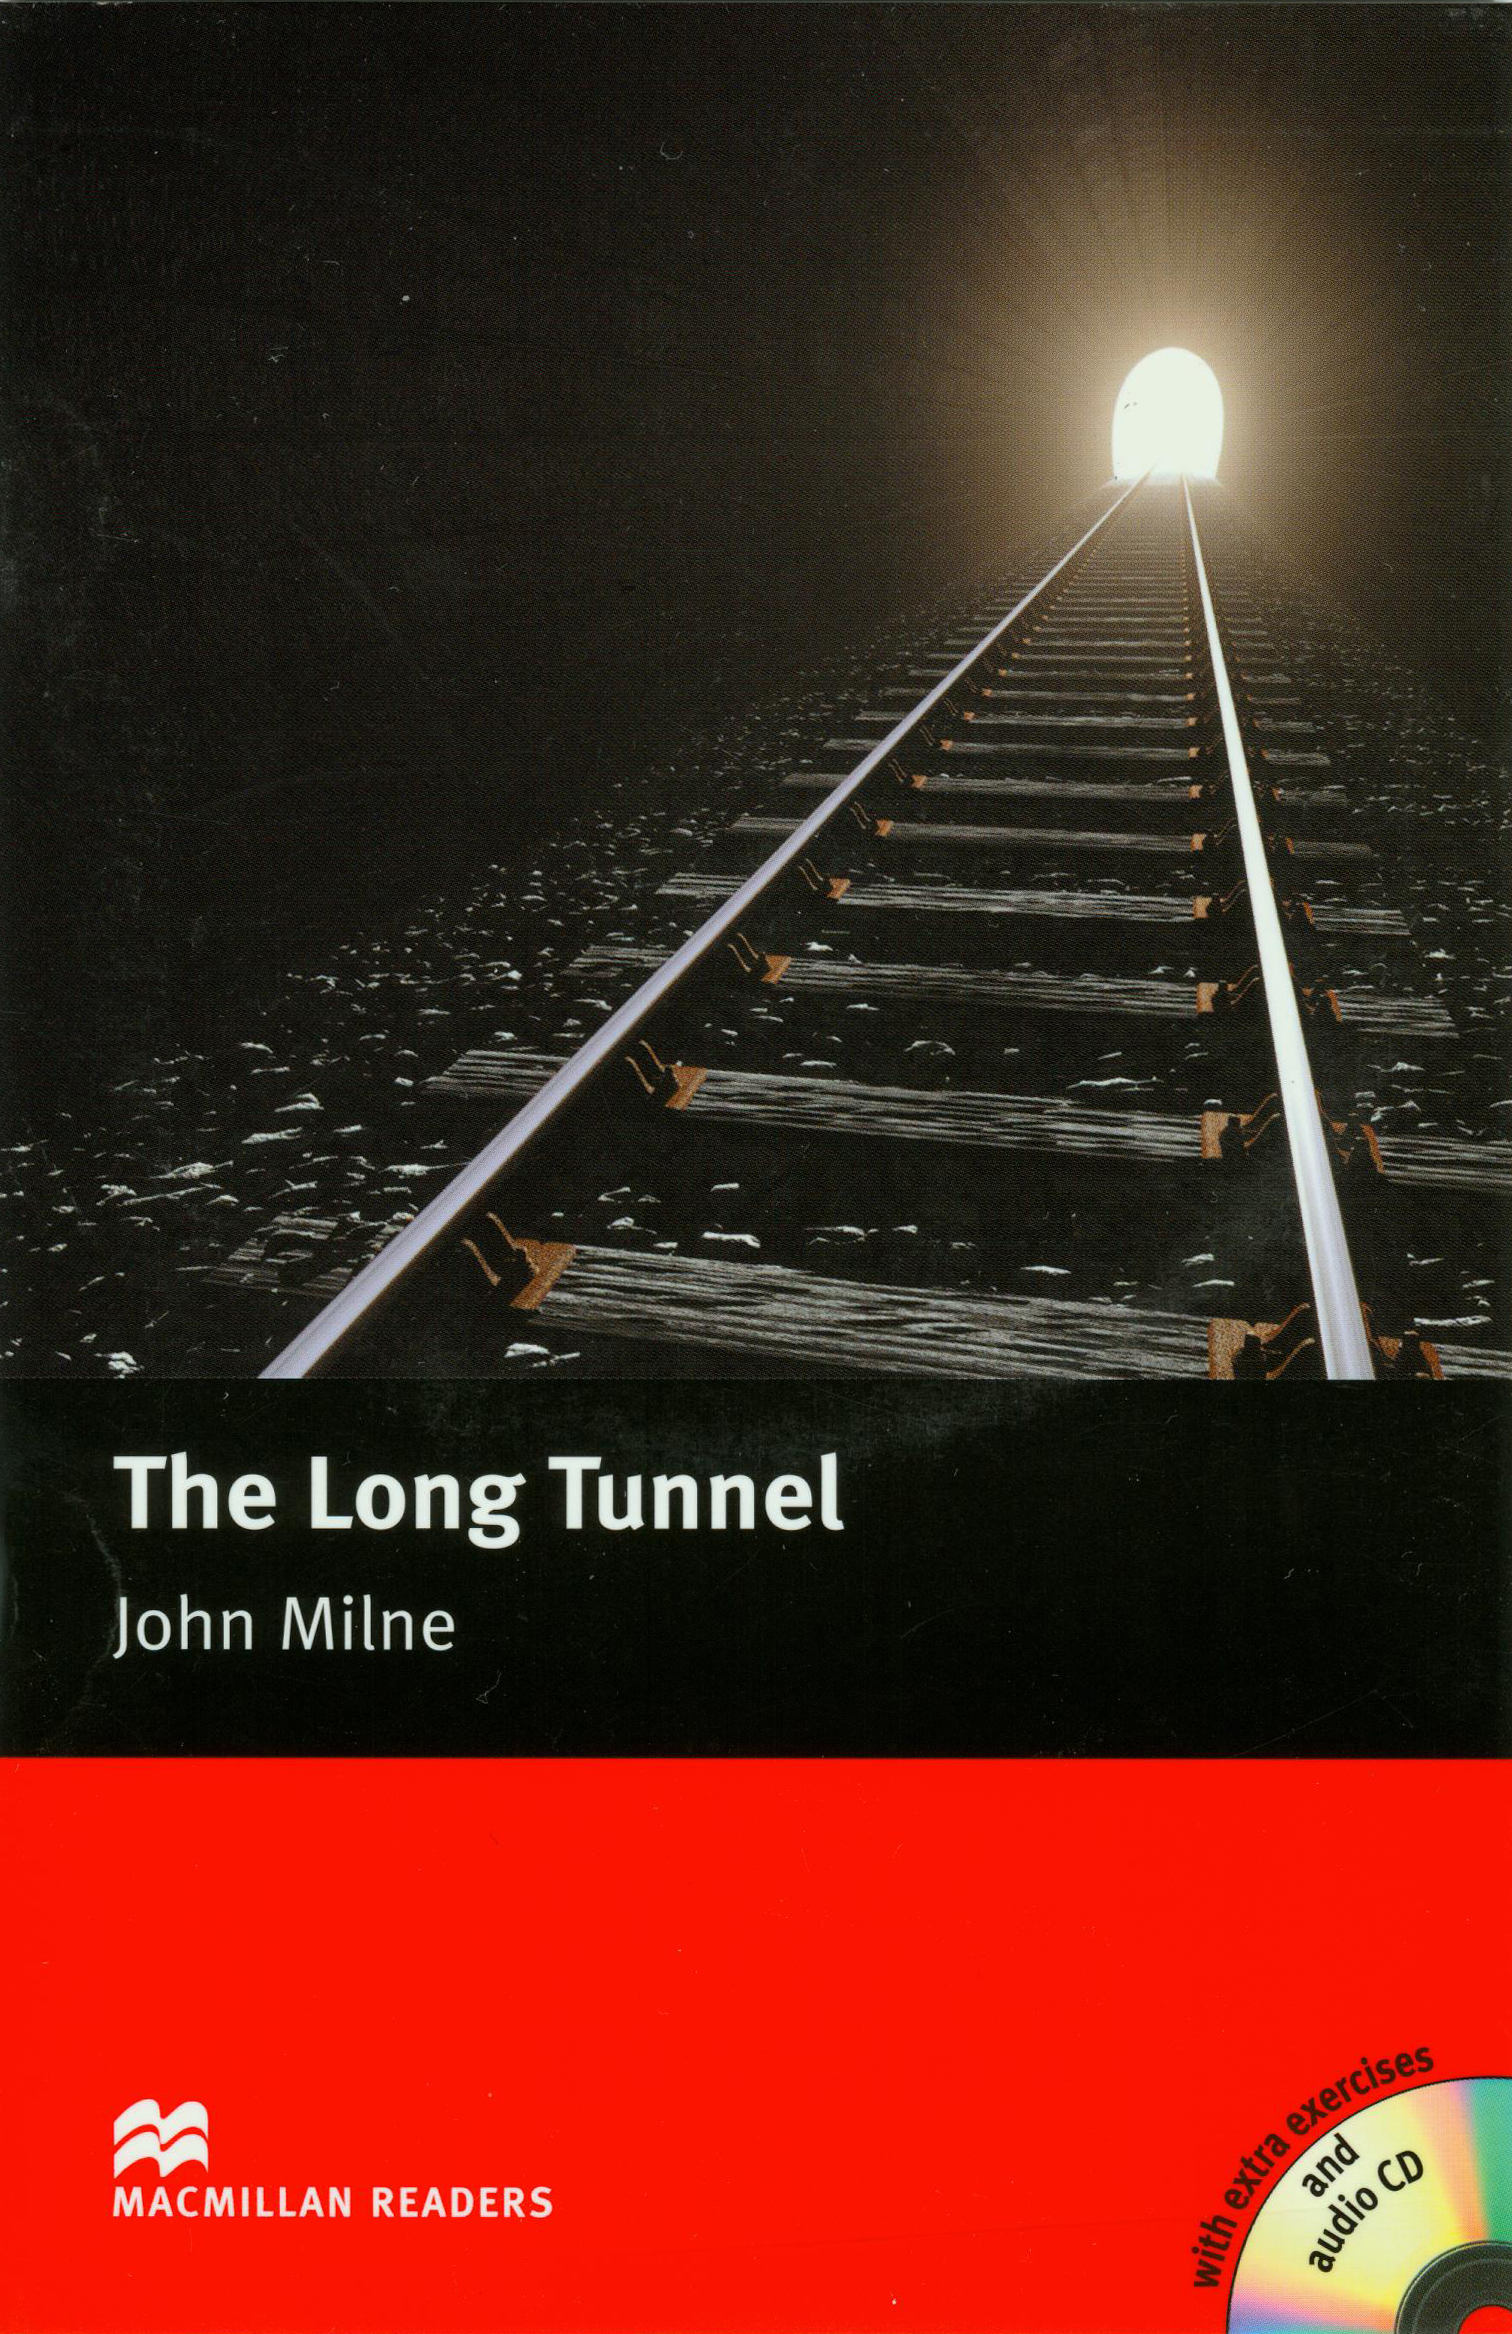 download the long tunnel john milne pdf file